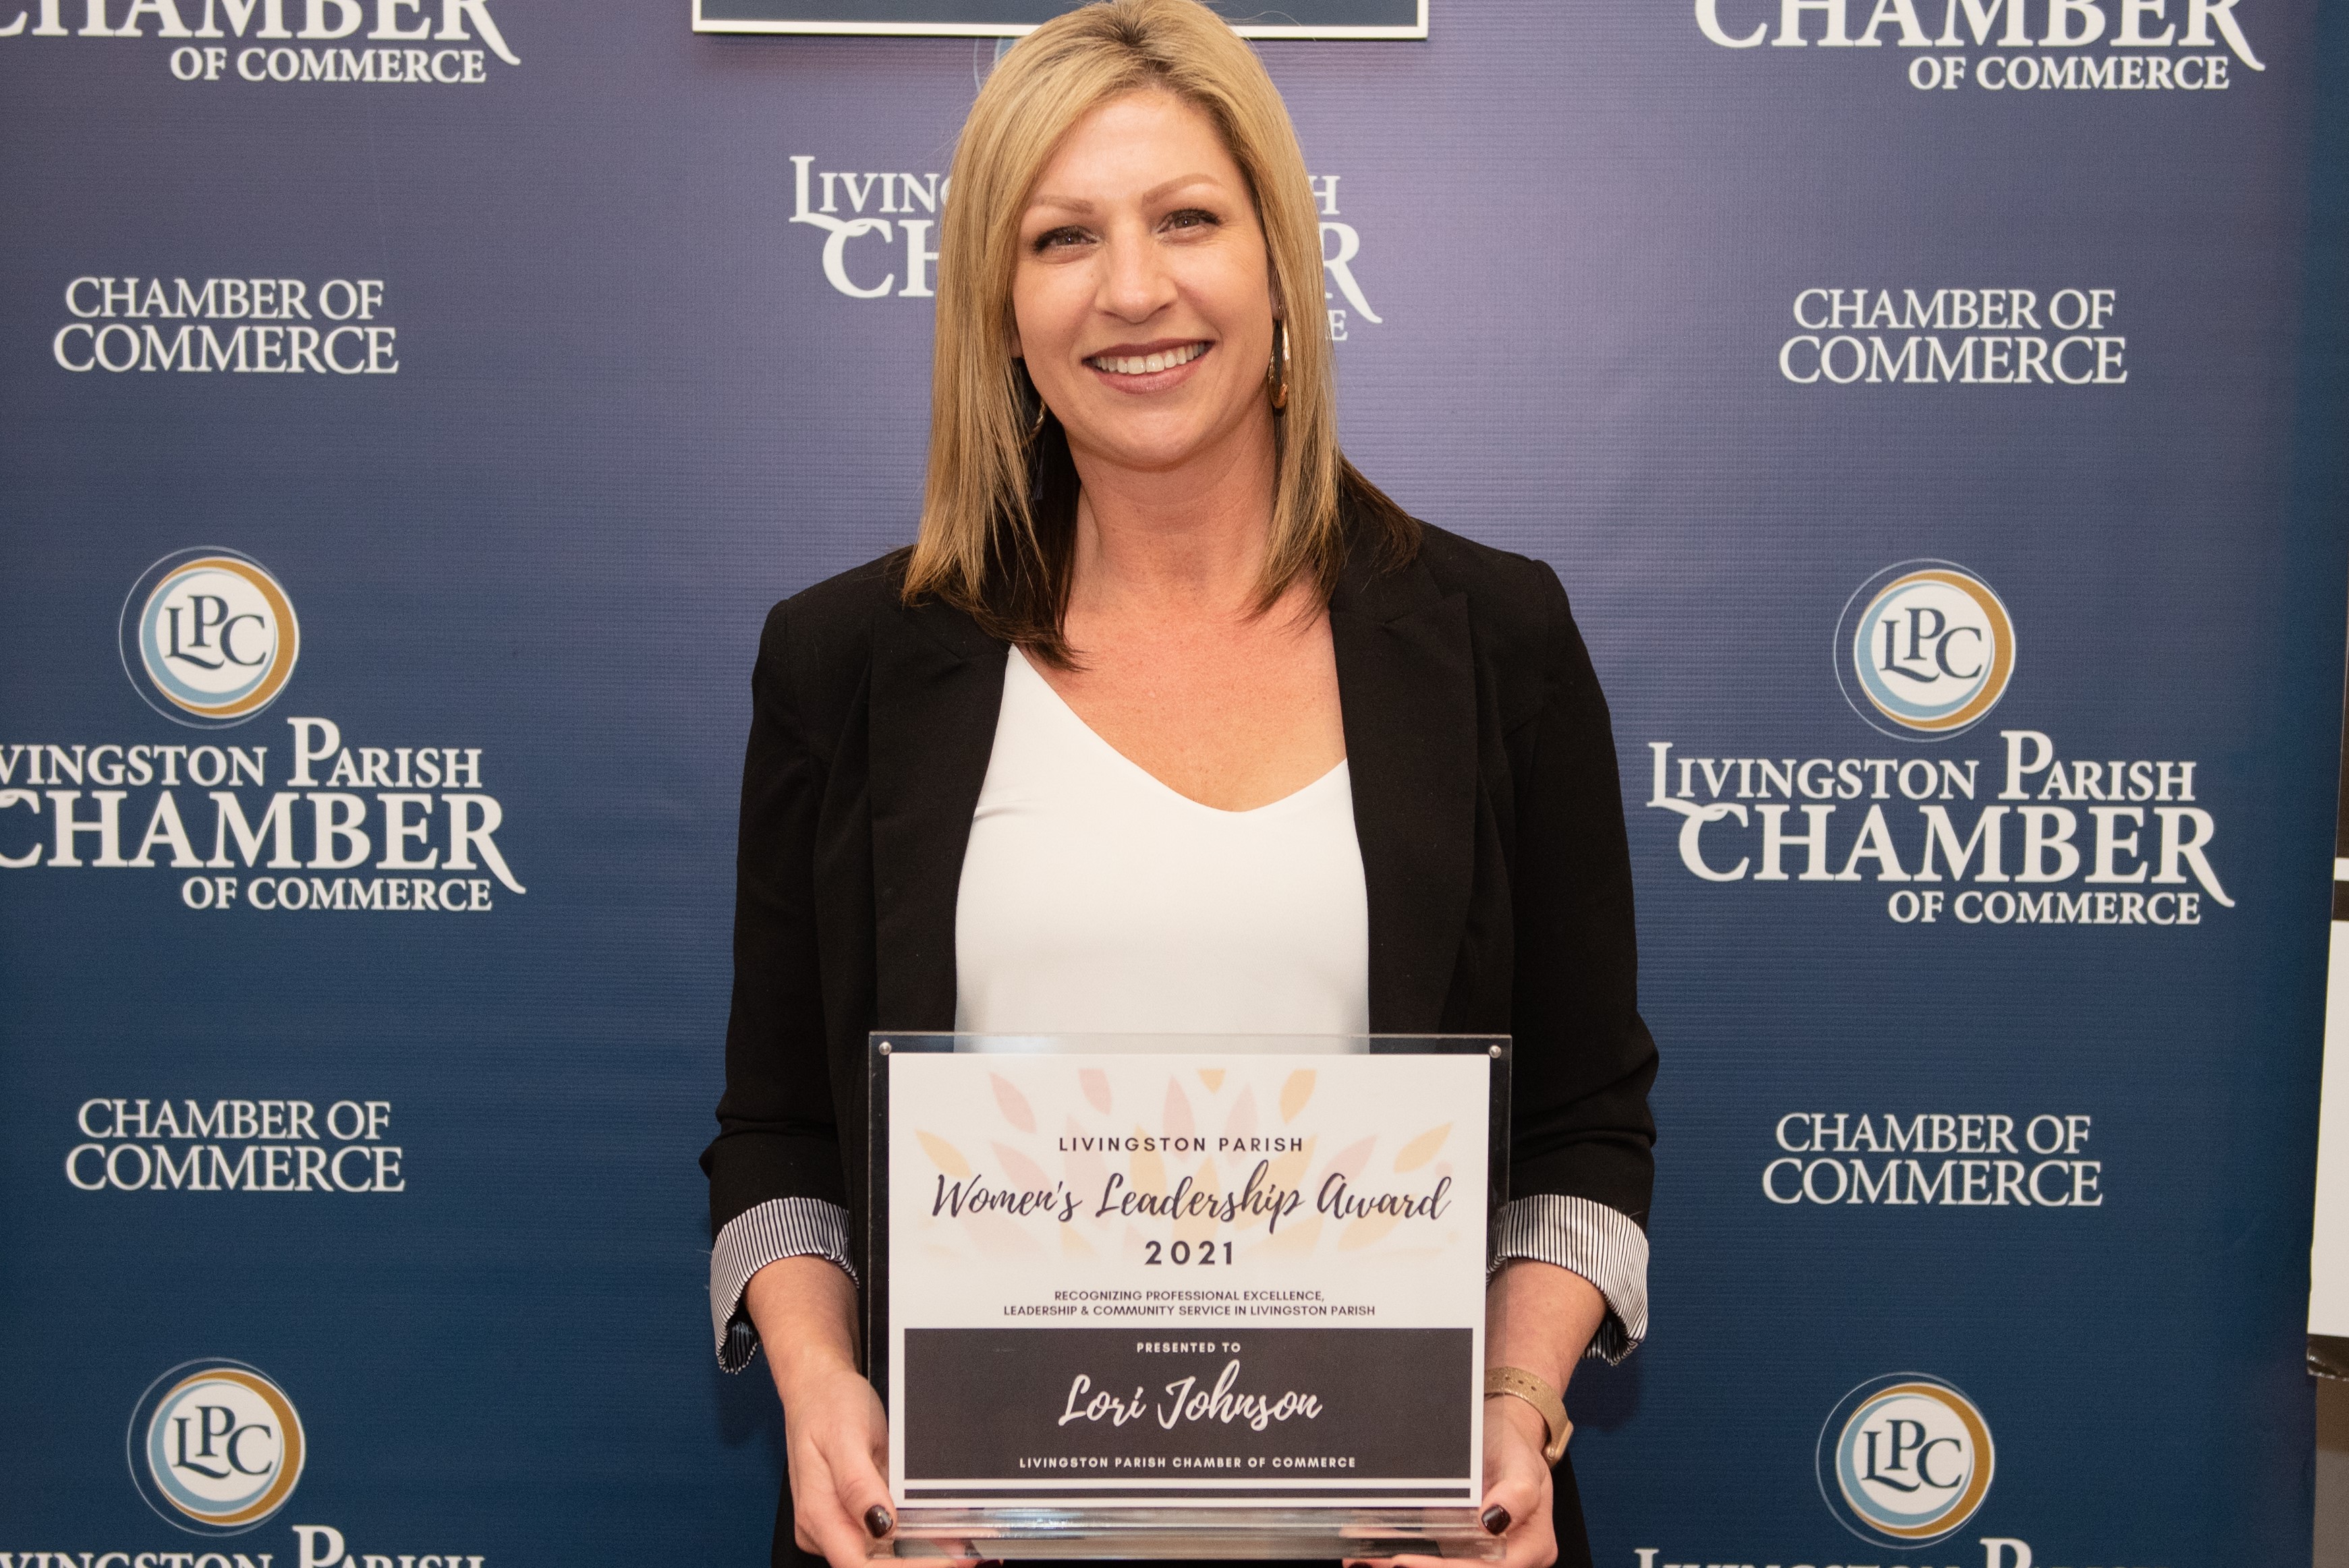 2021 Women's Leadership Award Winner, Lori Johnson